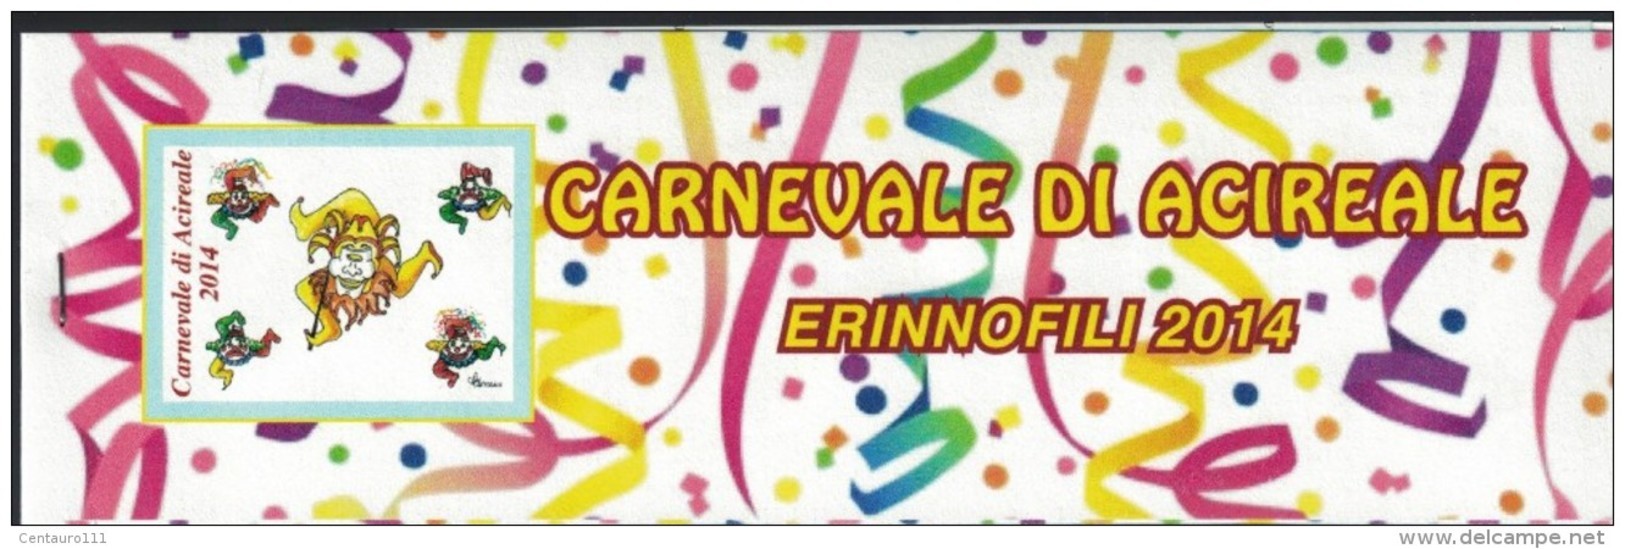 Acireale, Catania, Erinnofili, Carnevale 2014 - Erinnofilia